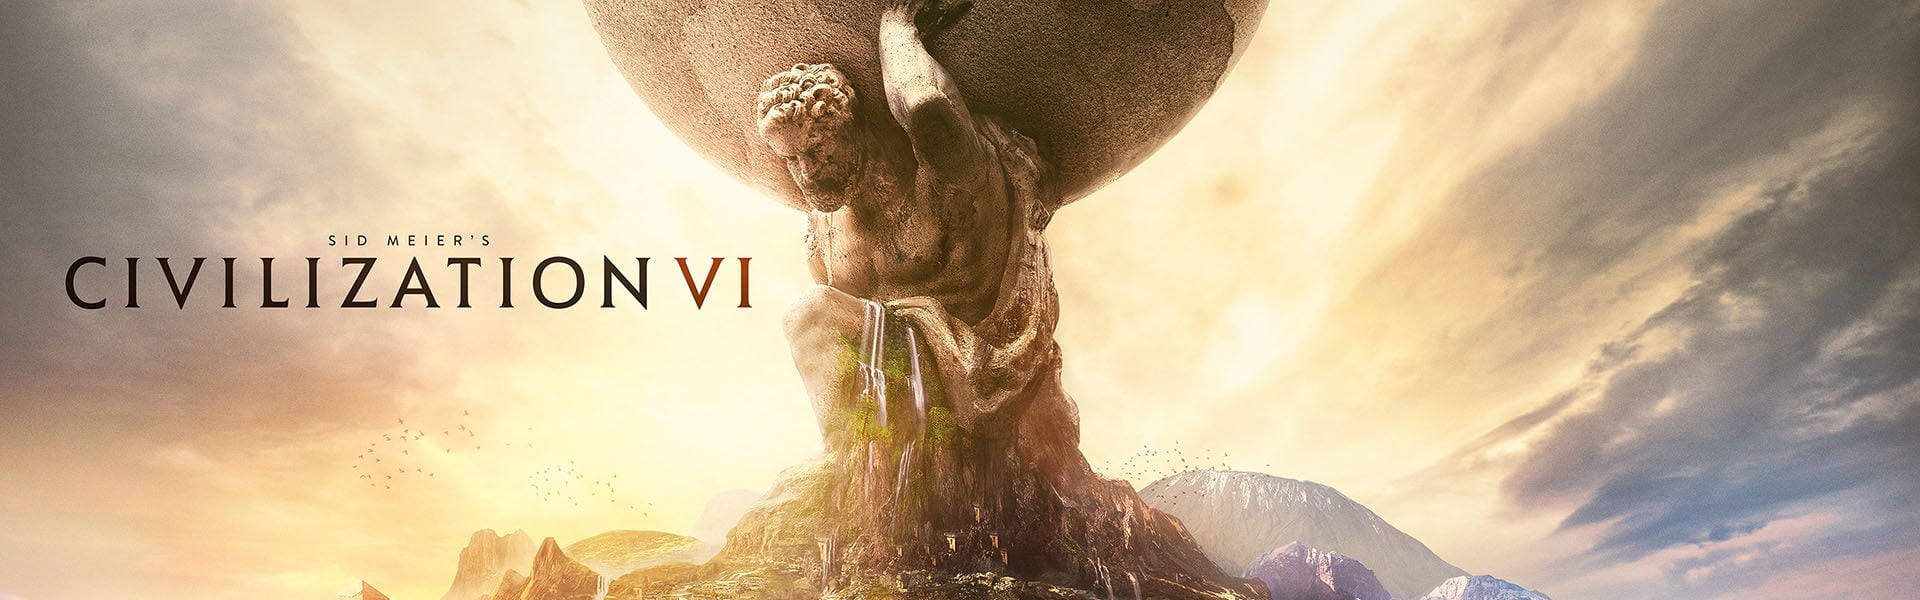 Civilization VI Review 18